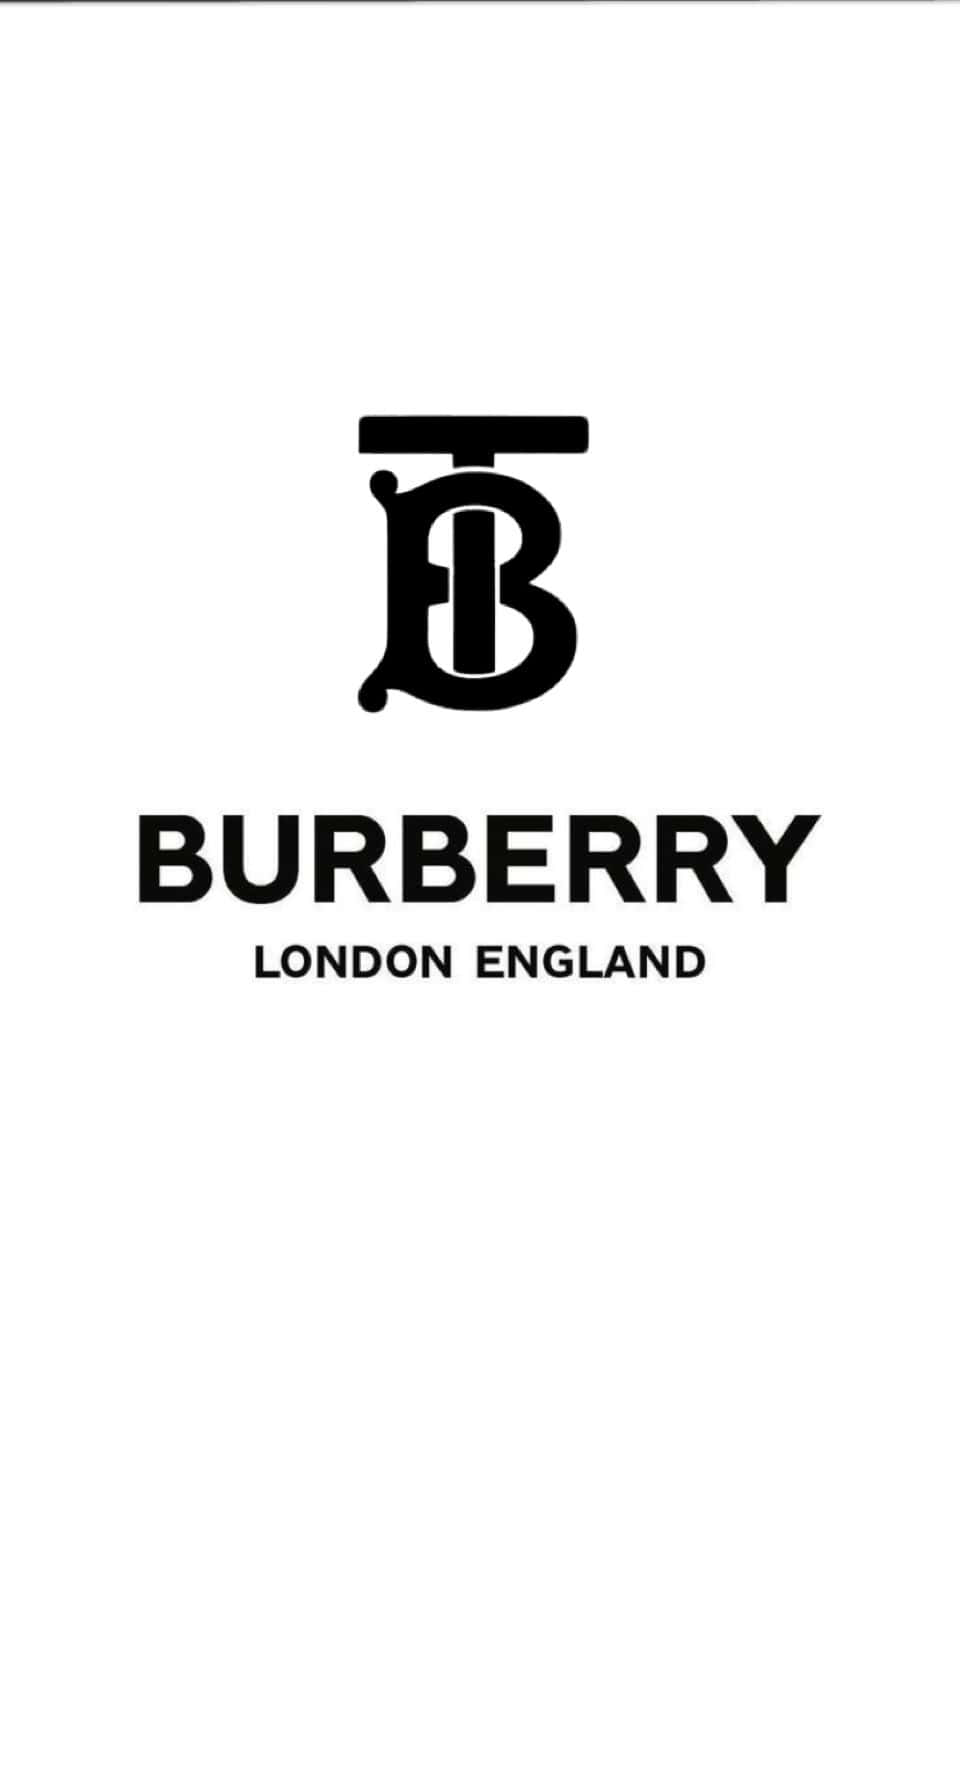 Burberrylondon England-logo.